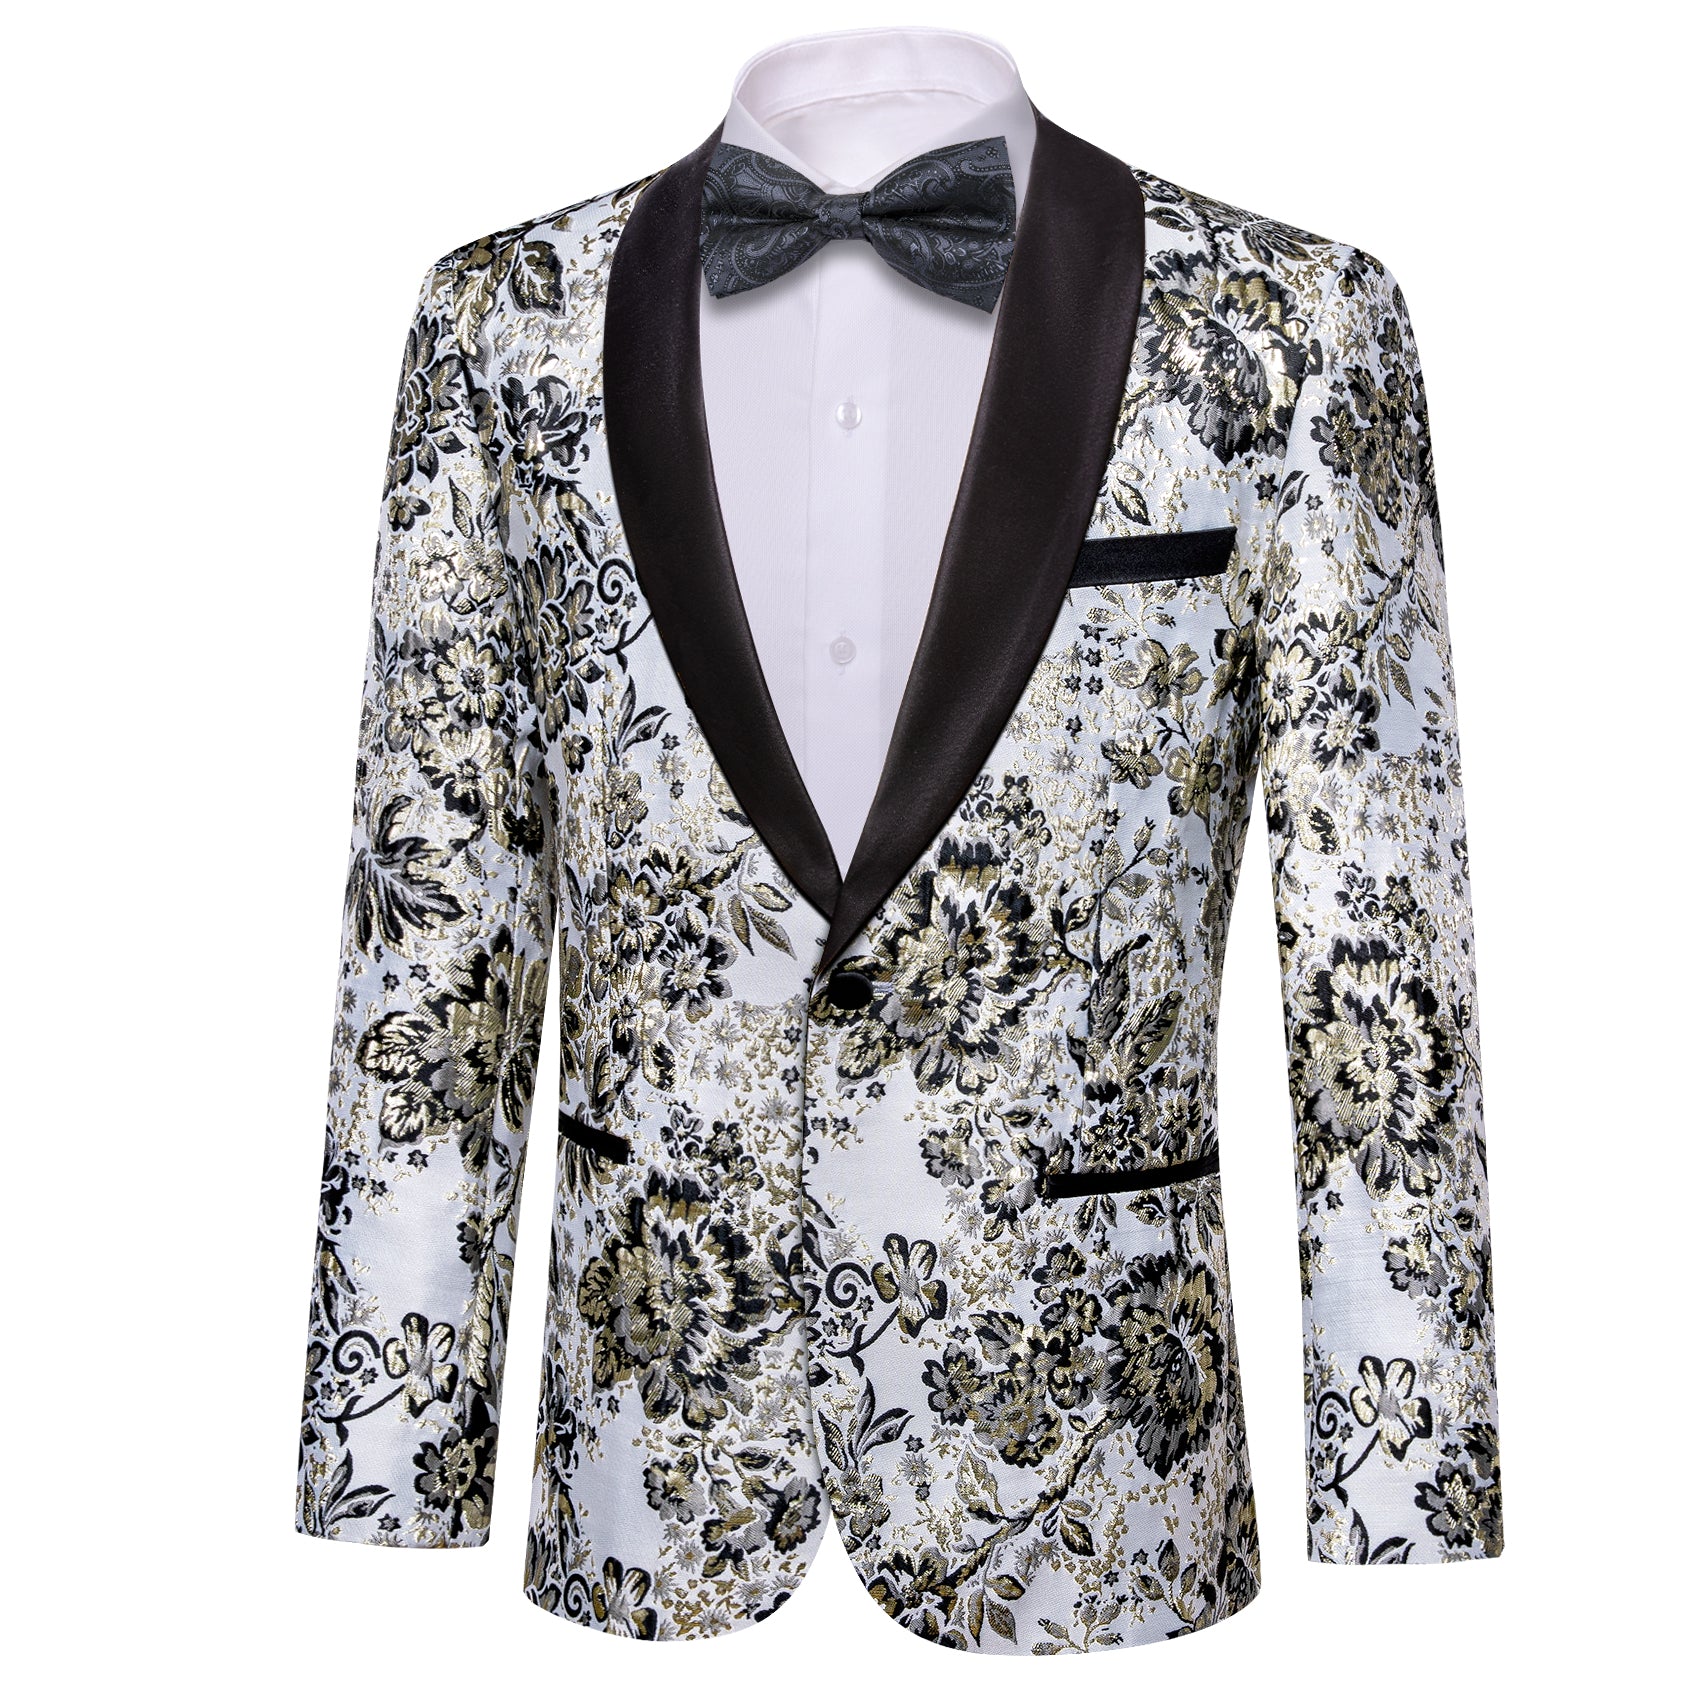 Men's Dress Party White Green Floral Suit Jacket Slim One Button Stylish Blazer